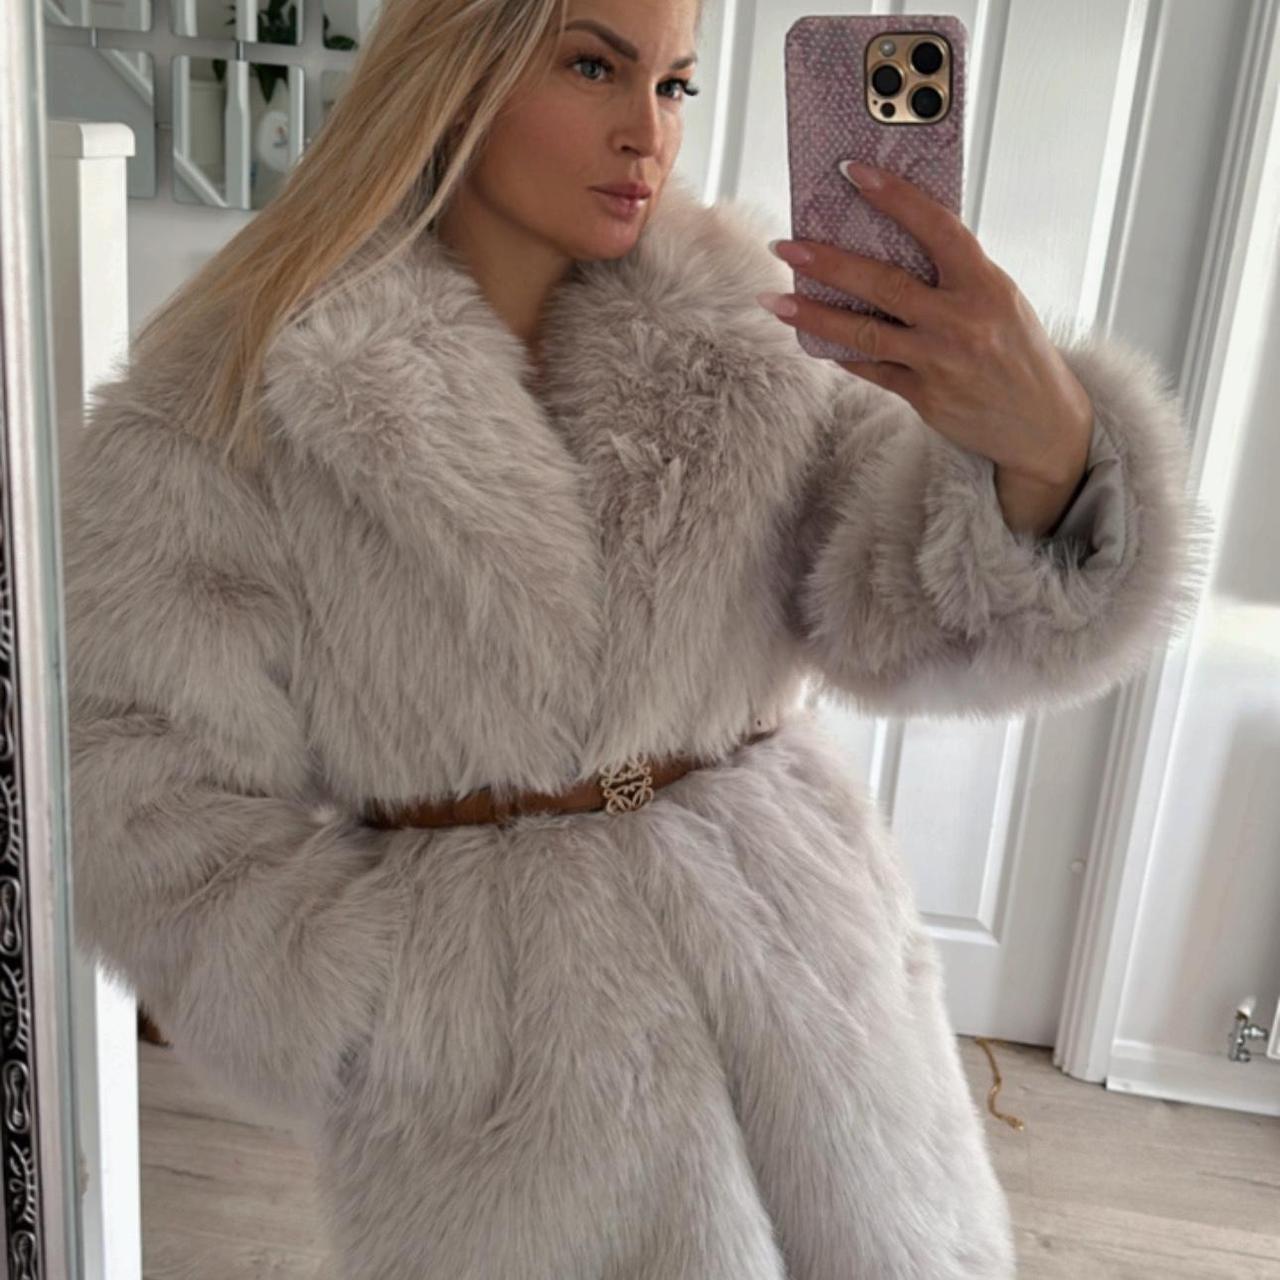 Zara viral faux fur jacket